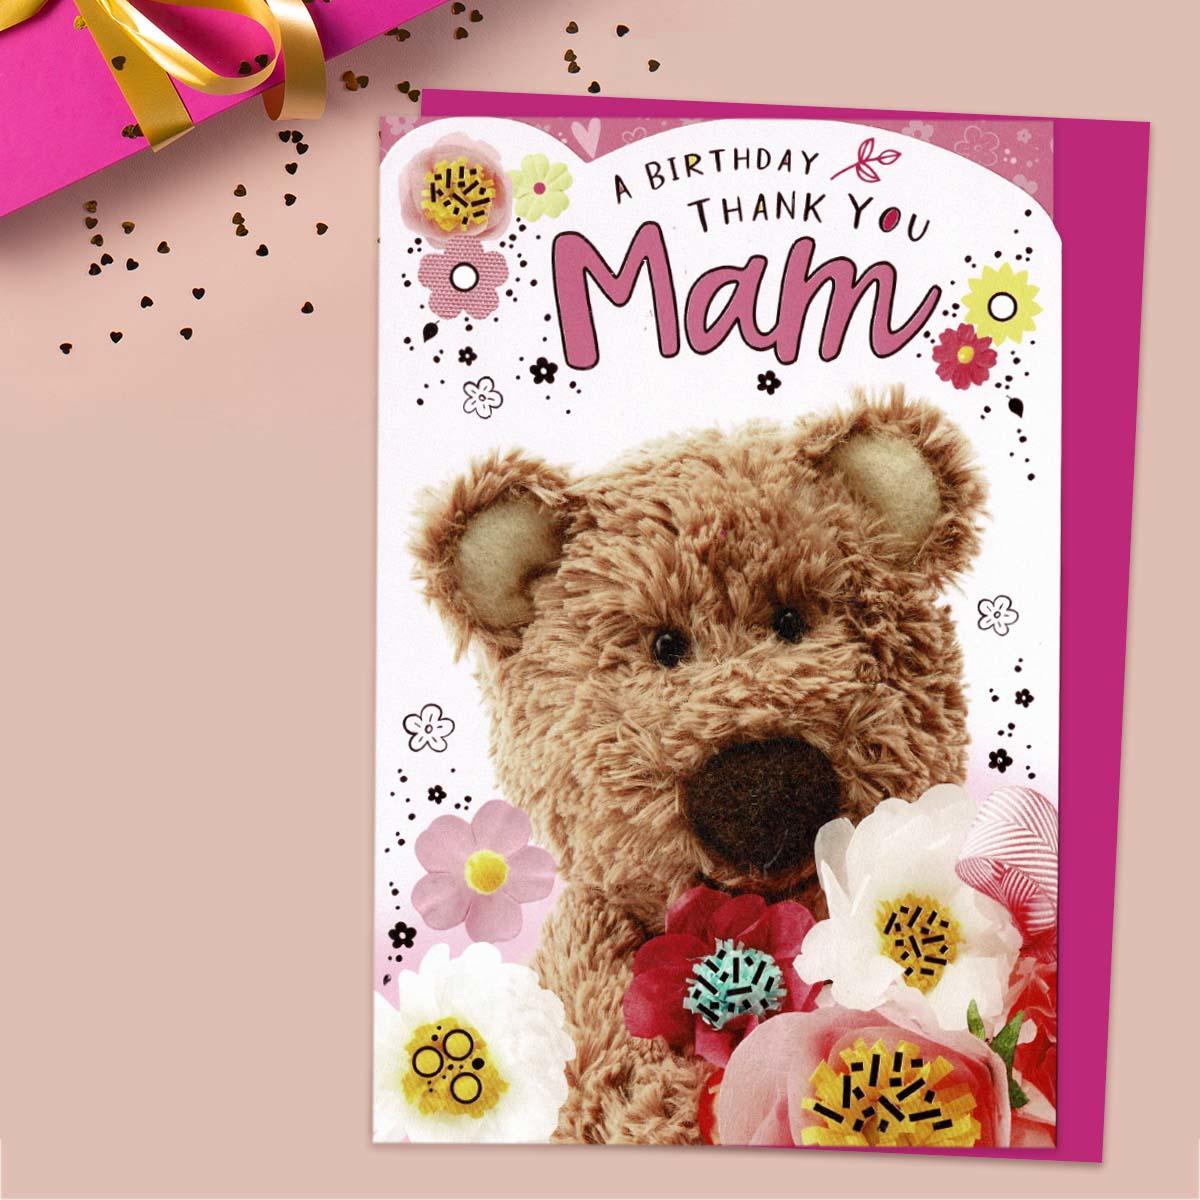 A Birthday Thank You Mam Barley Bear Card Front Image